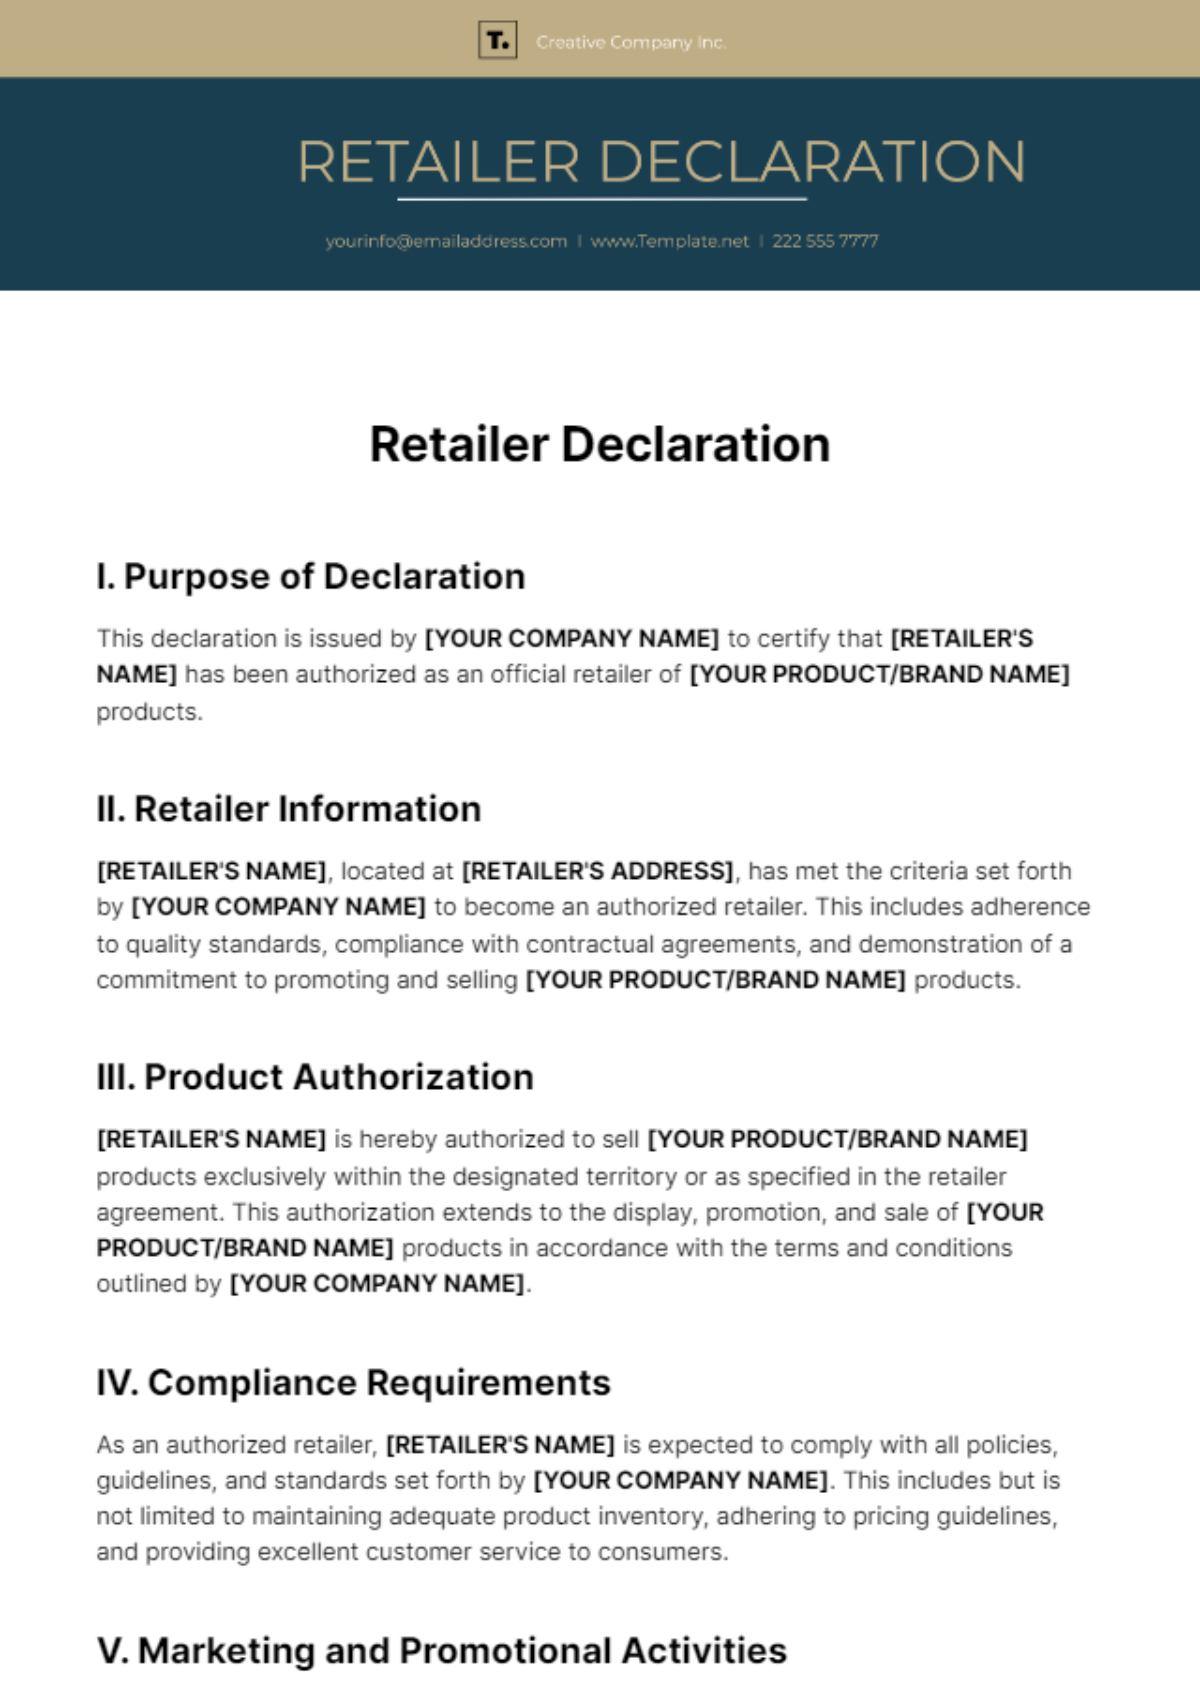 Free Retailer Declaration Template